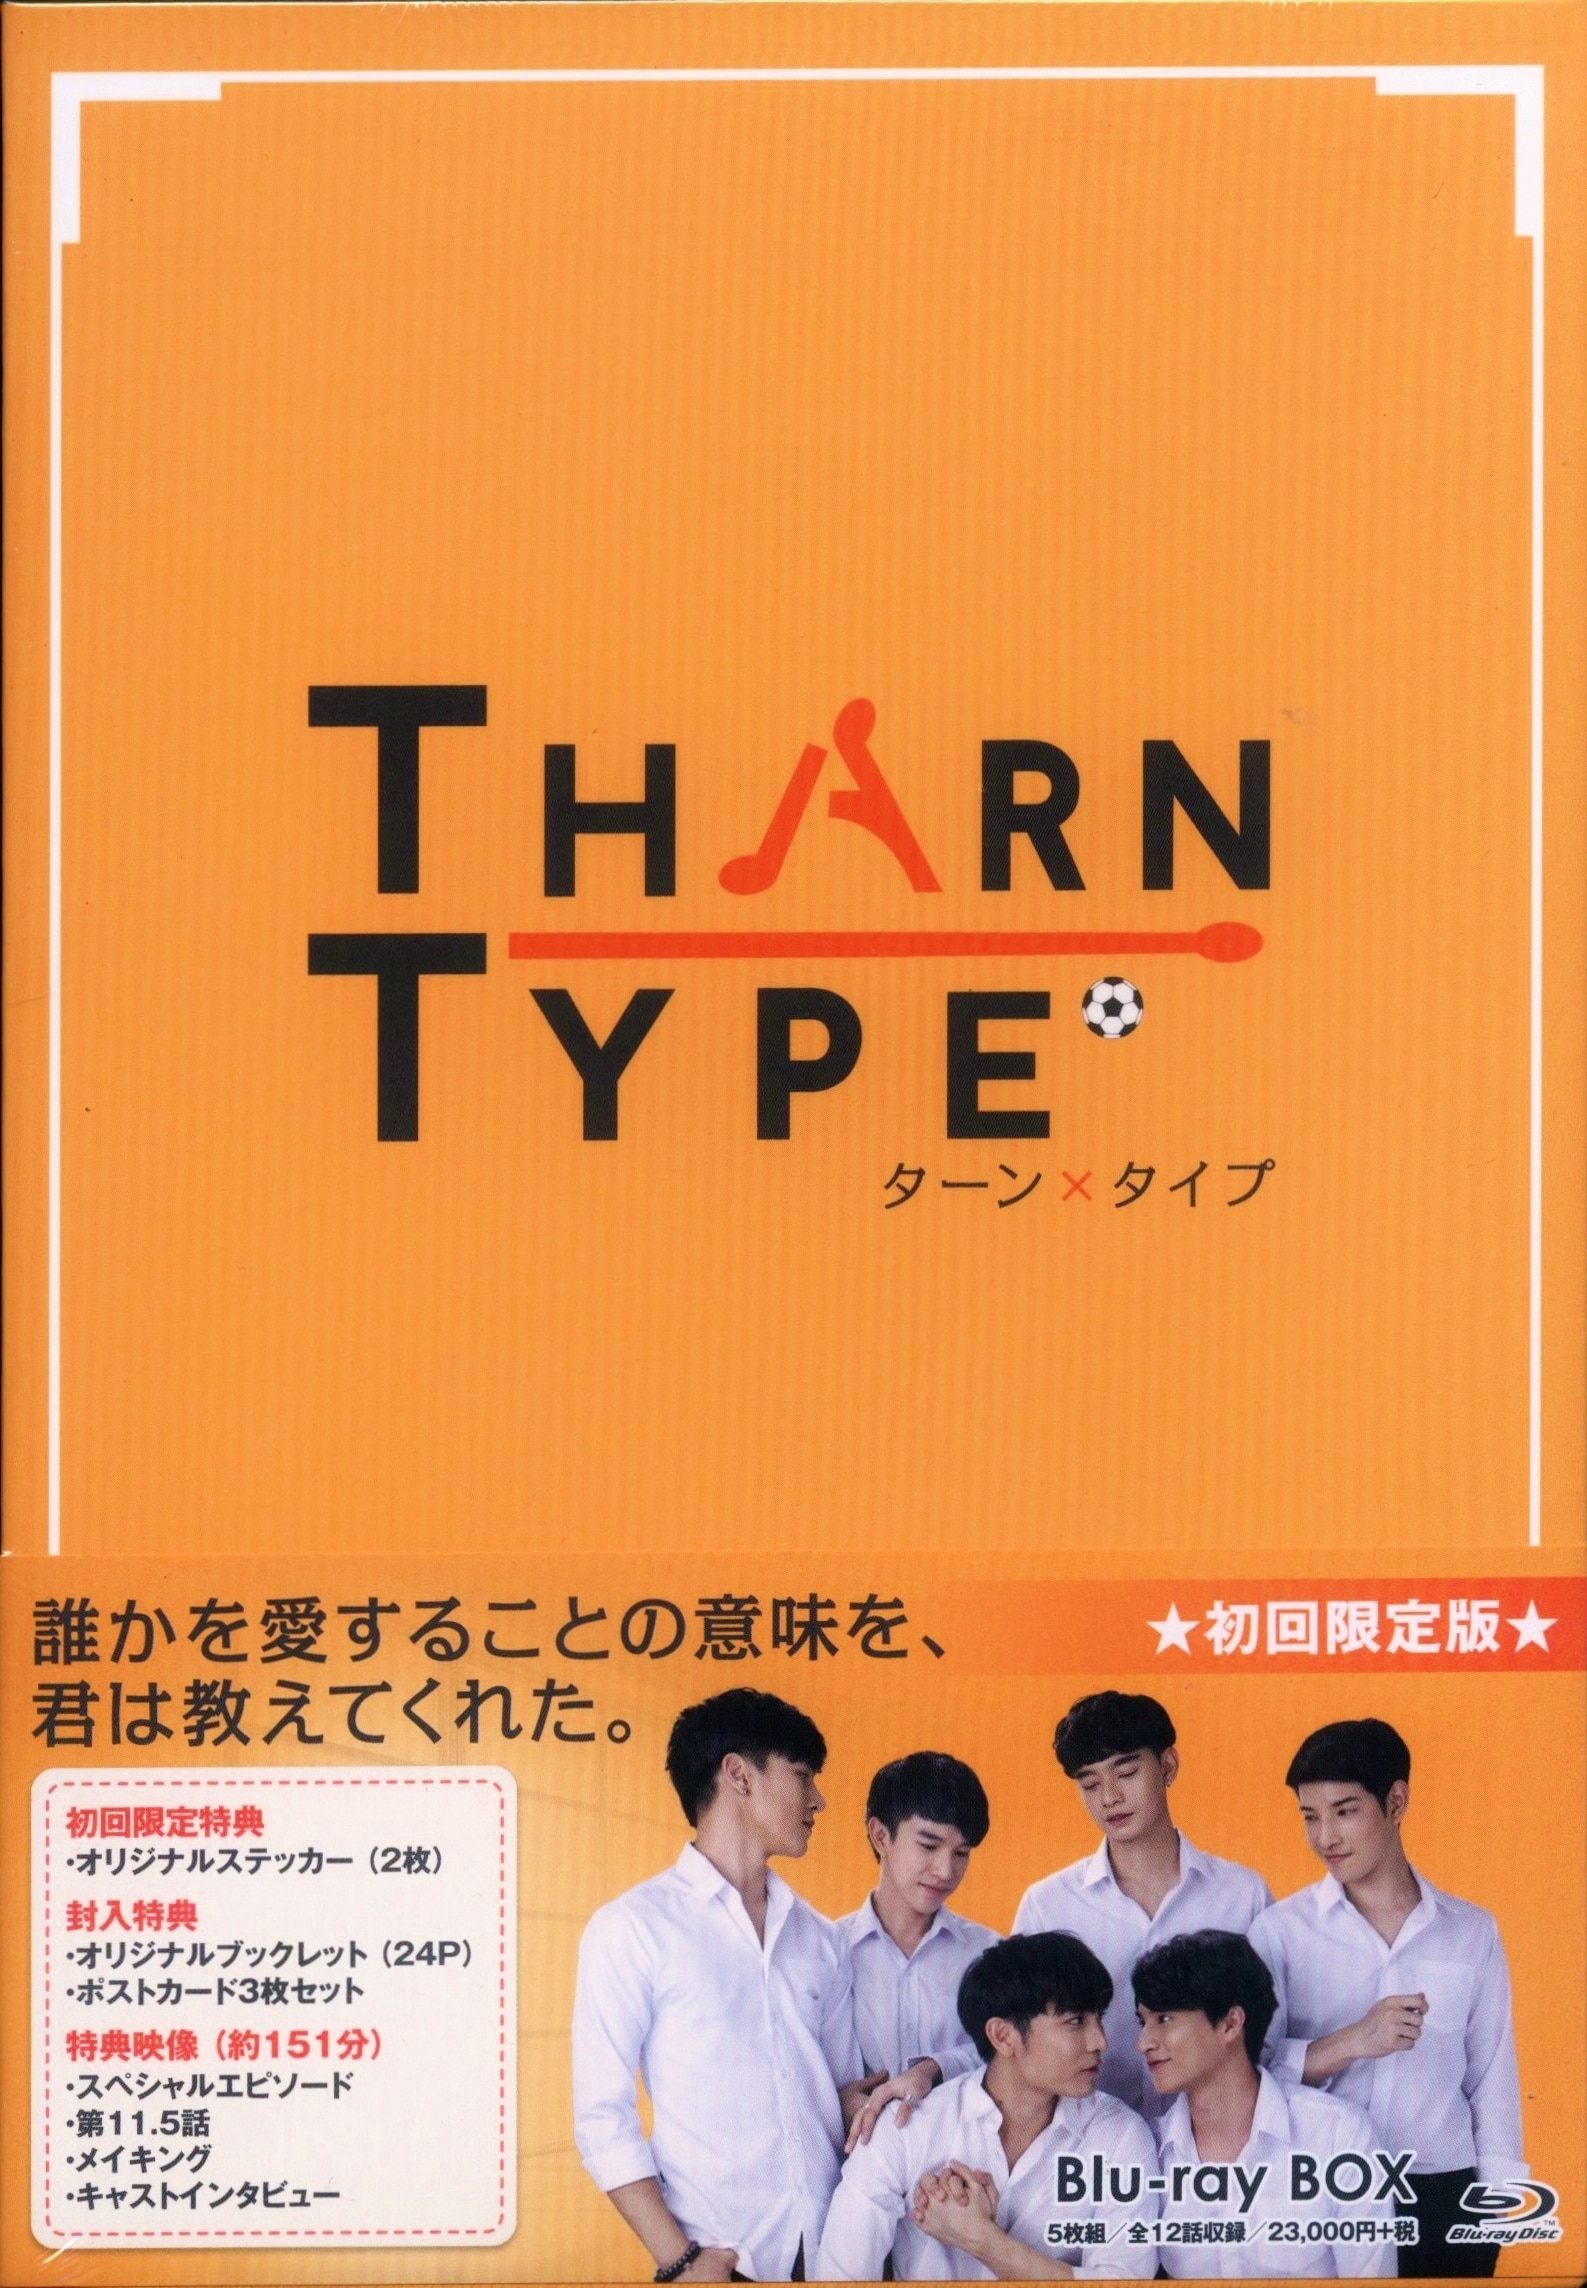 TharnType Blu-ray 低価格 ladonna.co.jp